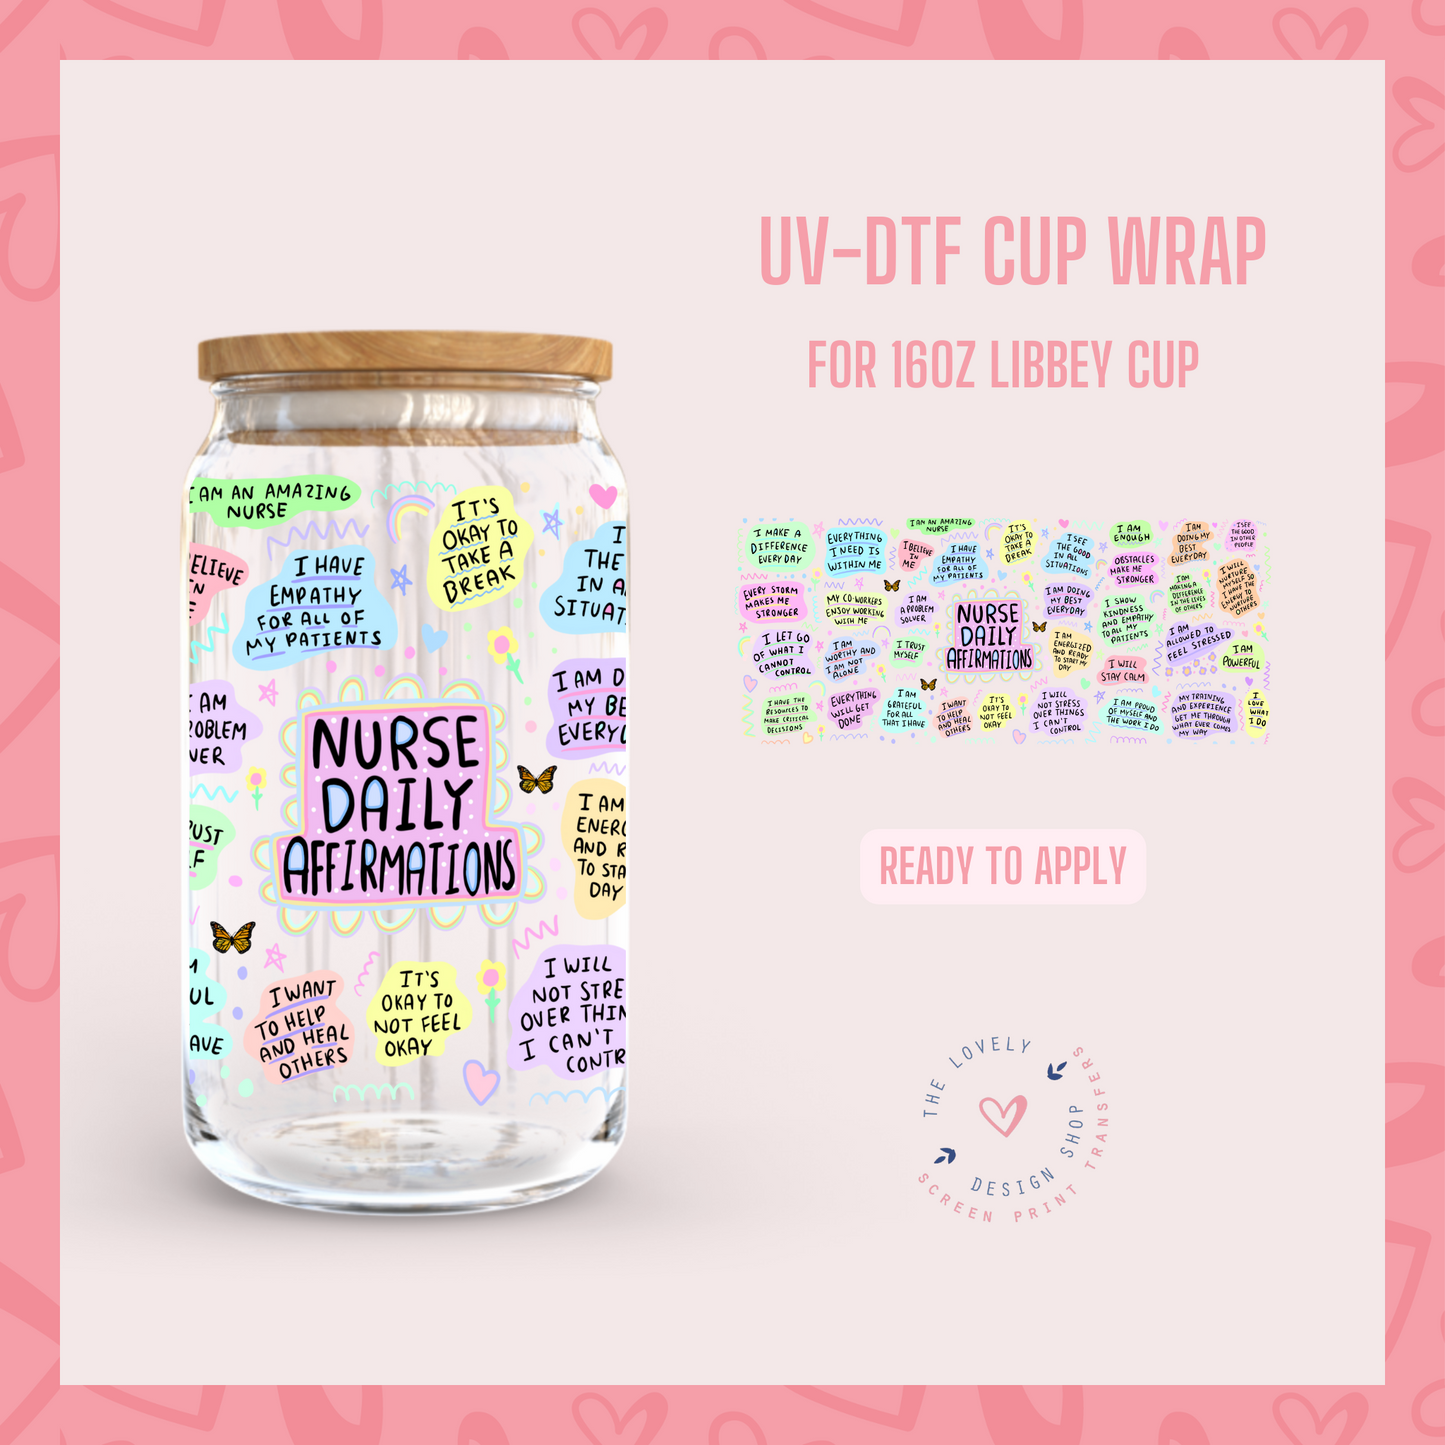 Nurse Daily Affirmations - UV DTF 16 oz Libbey Cup Wrap (Ready to Ship)